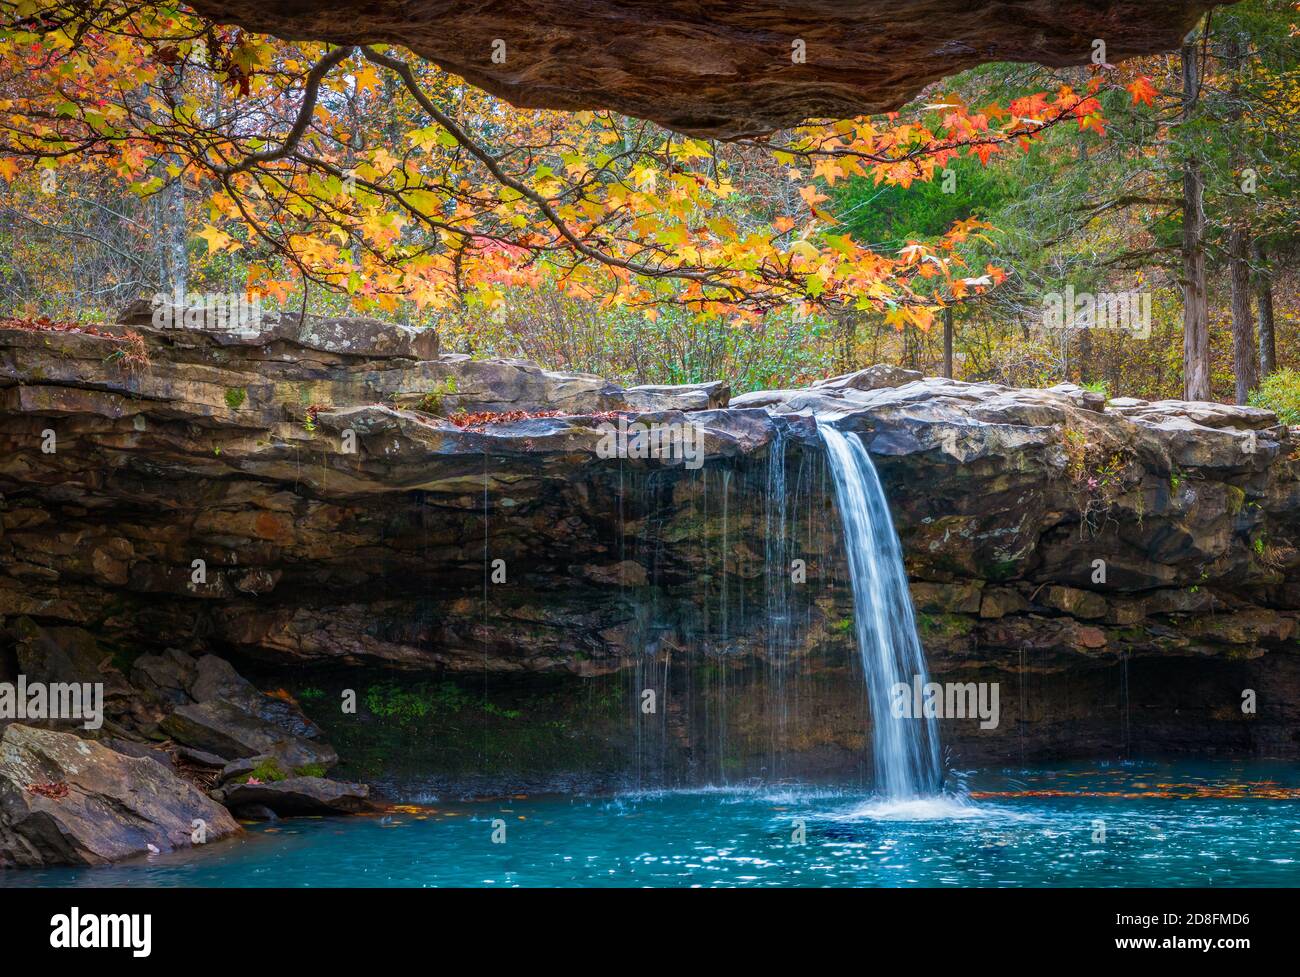 Falling Beauty Waterfall auch als Falling Water Waterfall bekannt ist ein Naturwunder im Ozark National Forest, Arkansas. Stockfoto